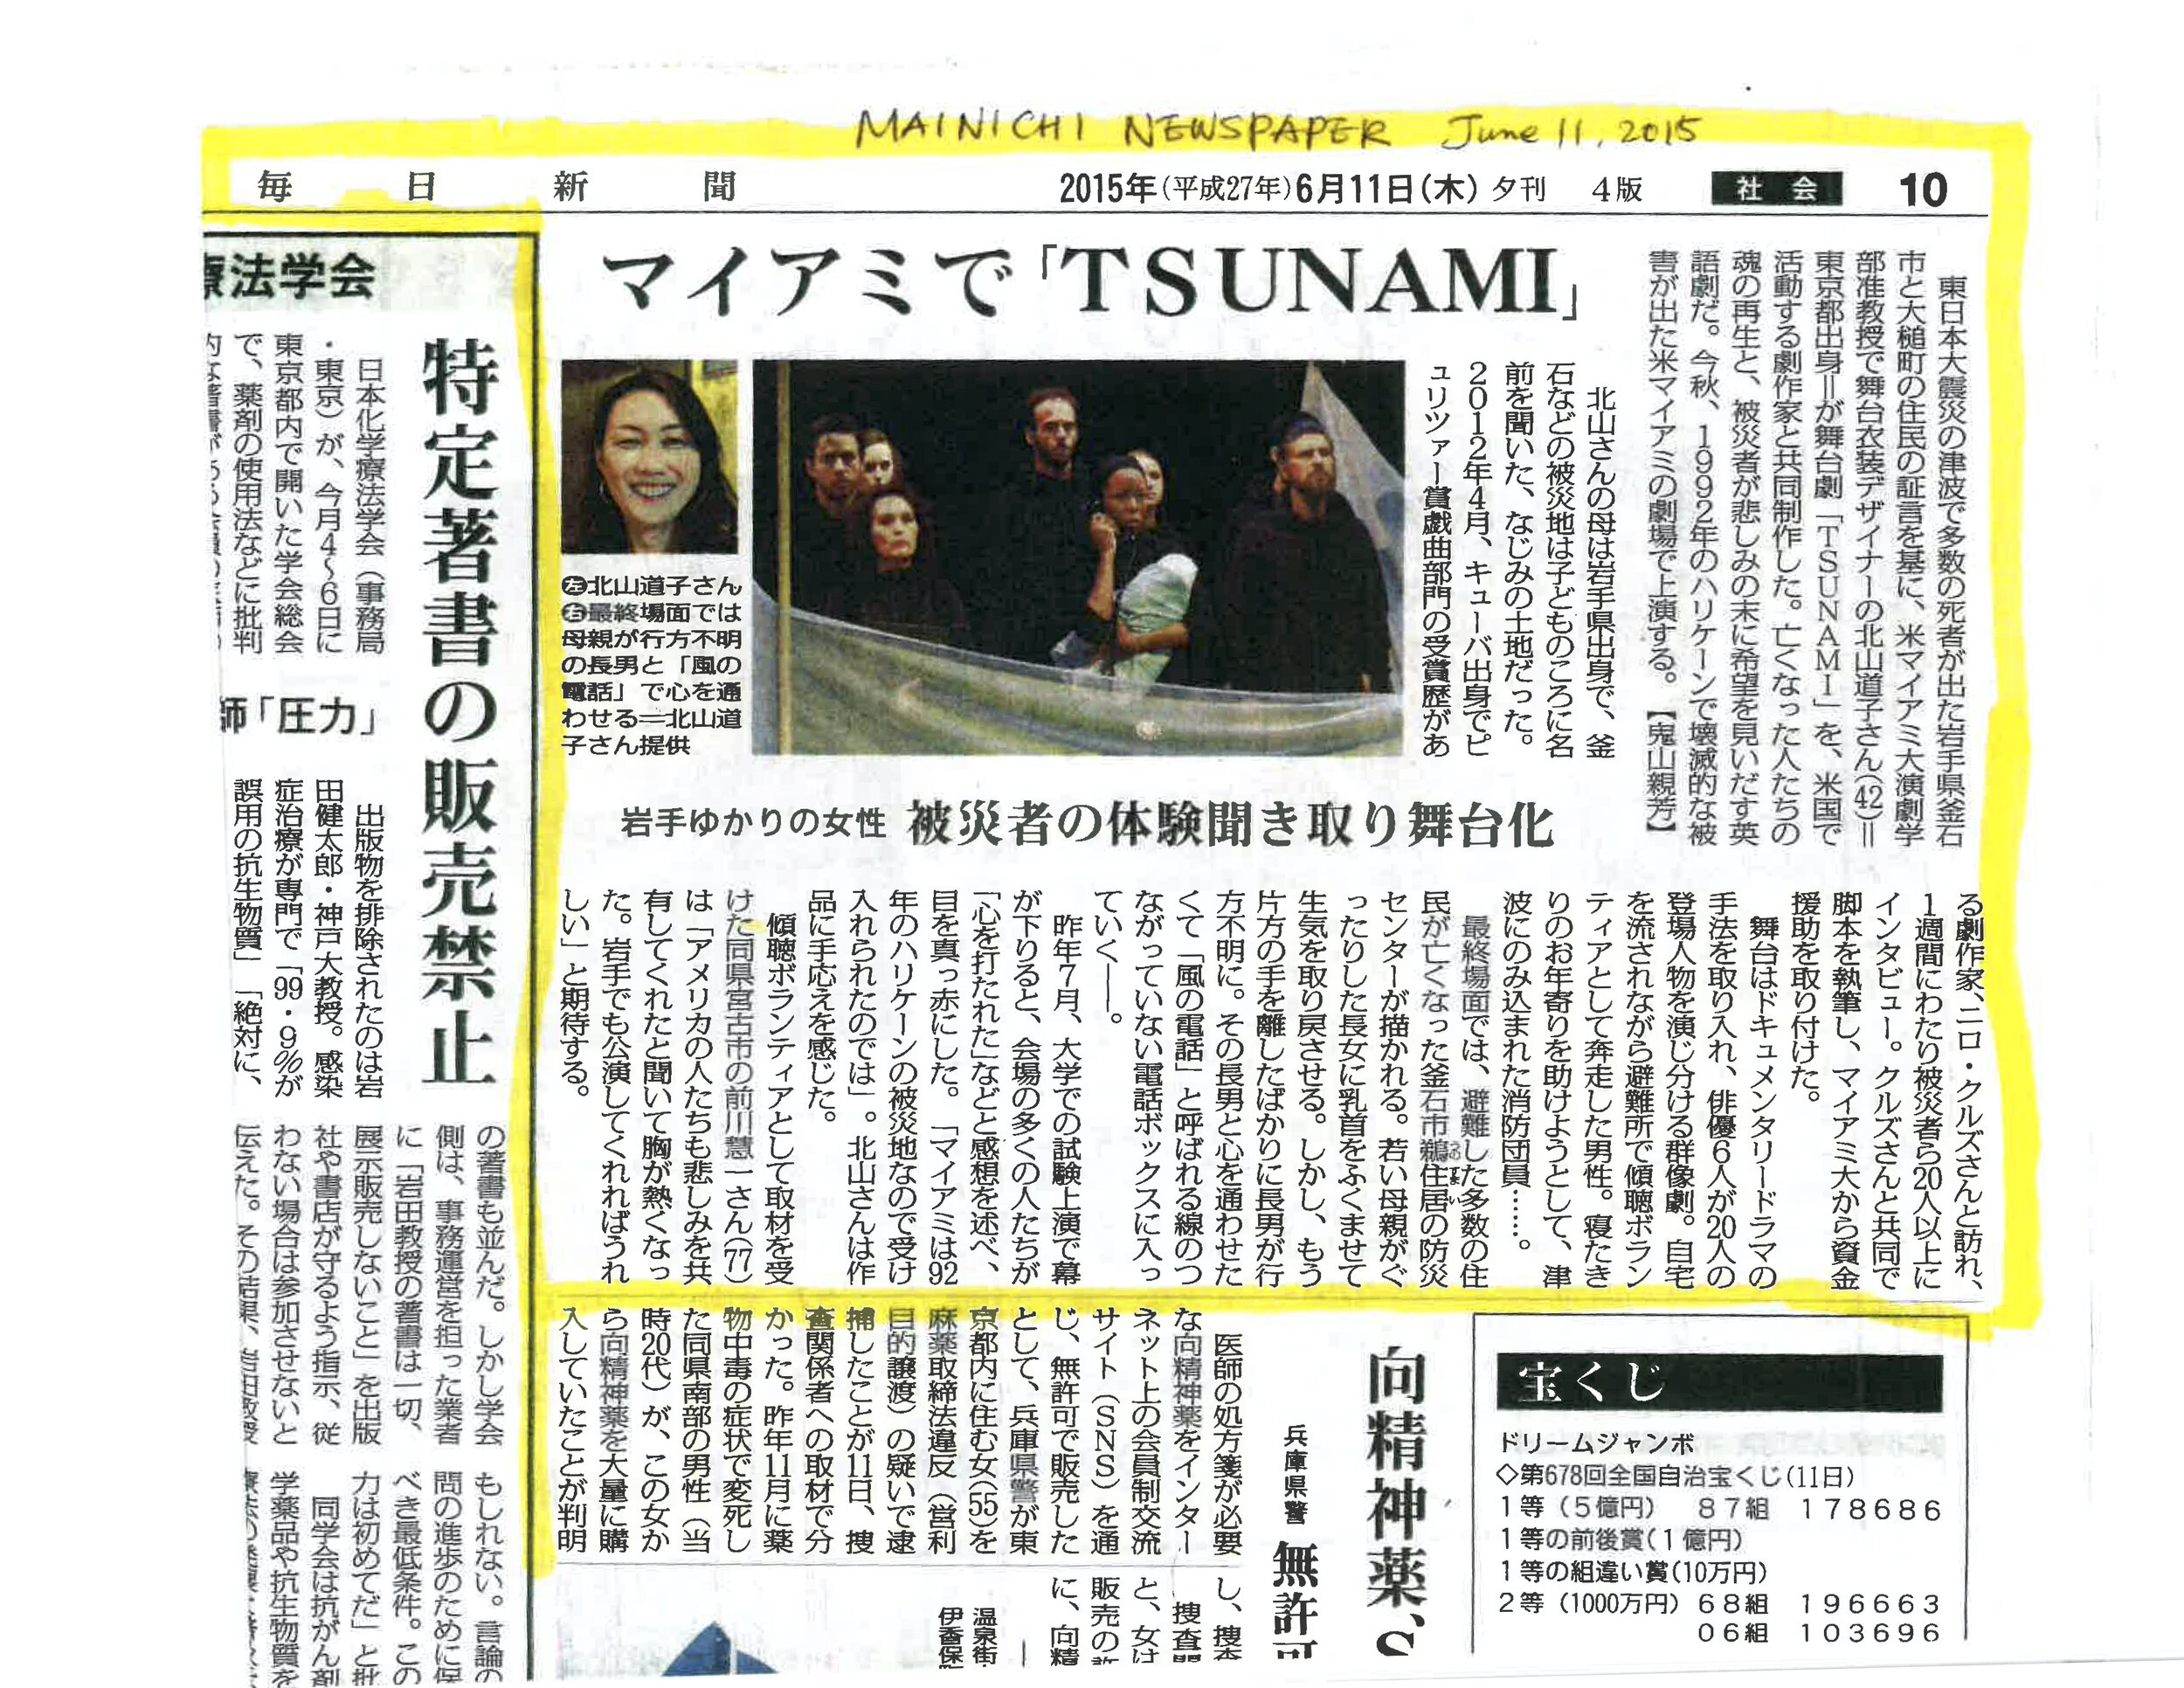 Tsunami Article 1 Michiko K Skinner